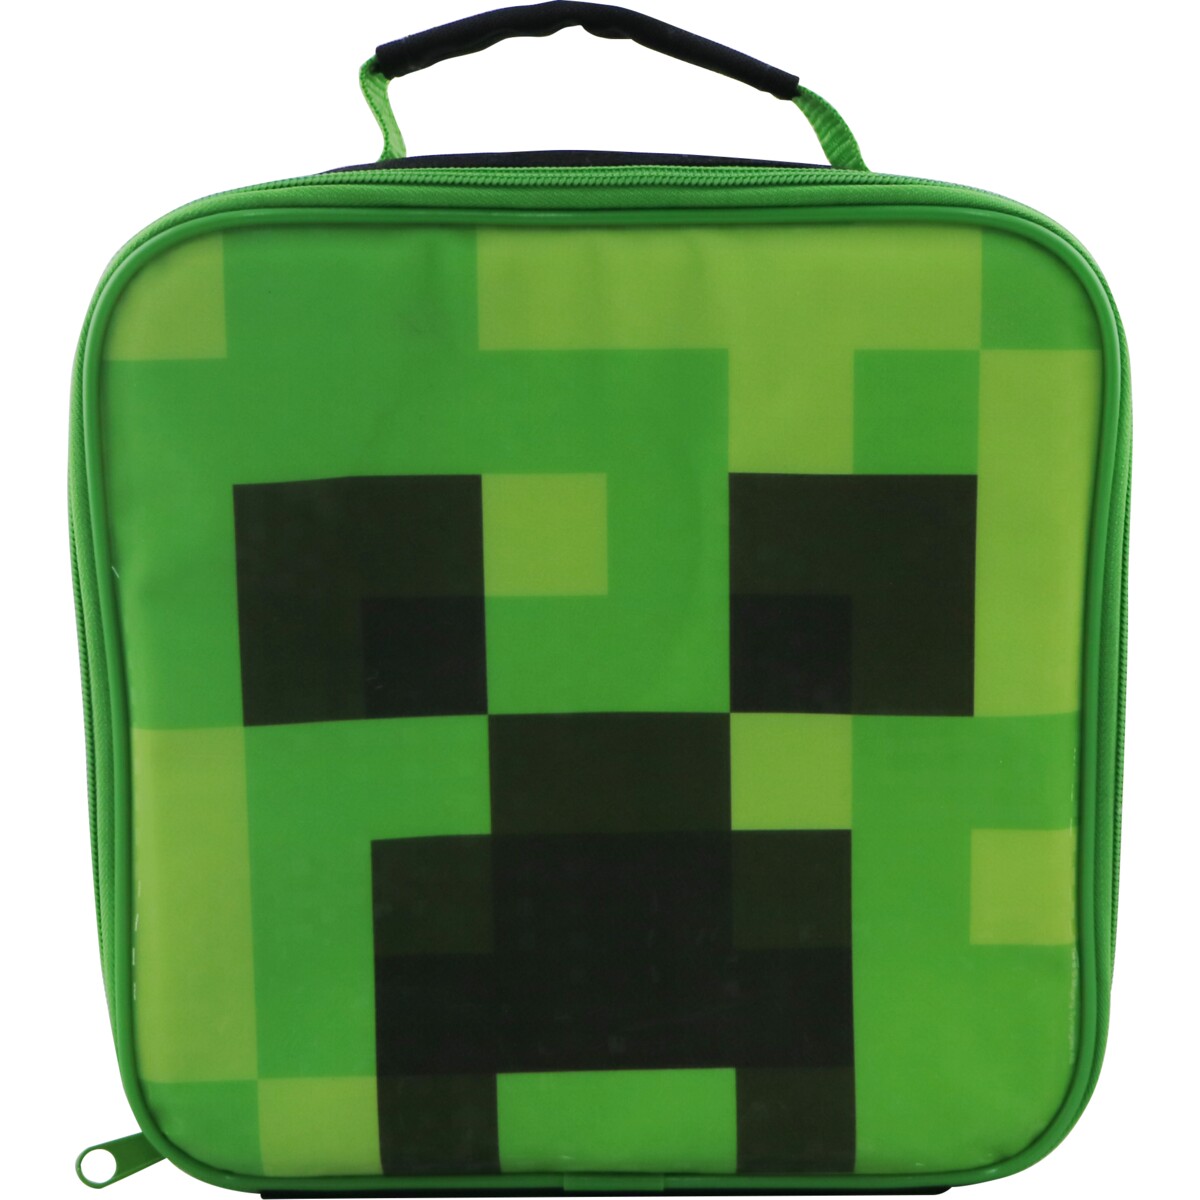 Minecraft Creeper Lunchbag